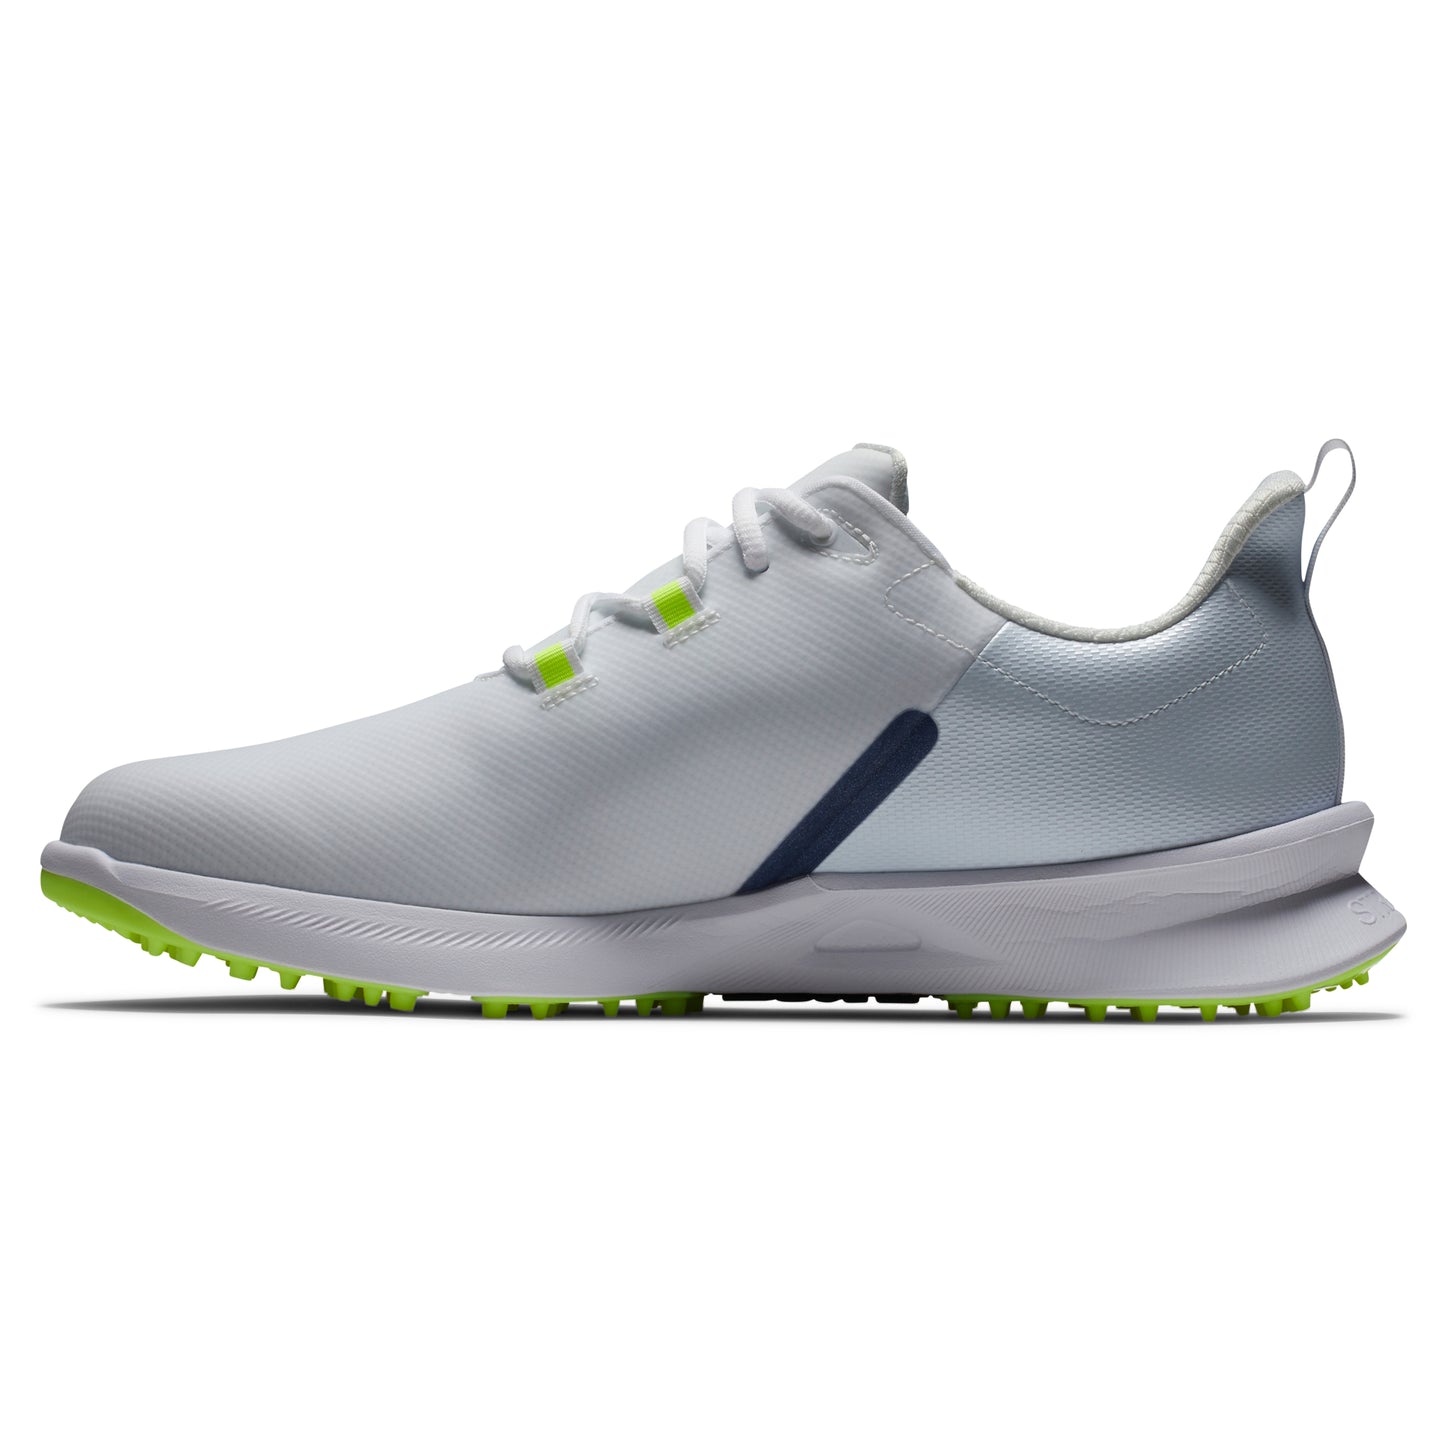 FootJoy Fuel Men's Golf Shoes 55453 - White/Navy/Green (Previous Season Style)